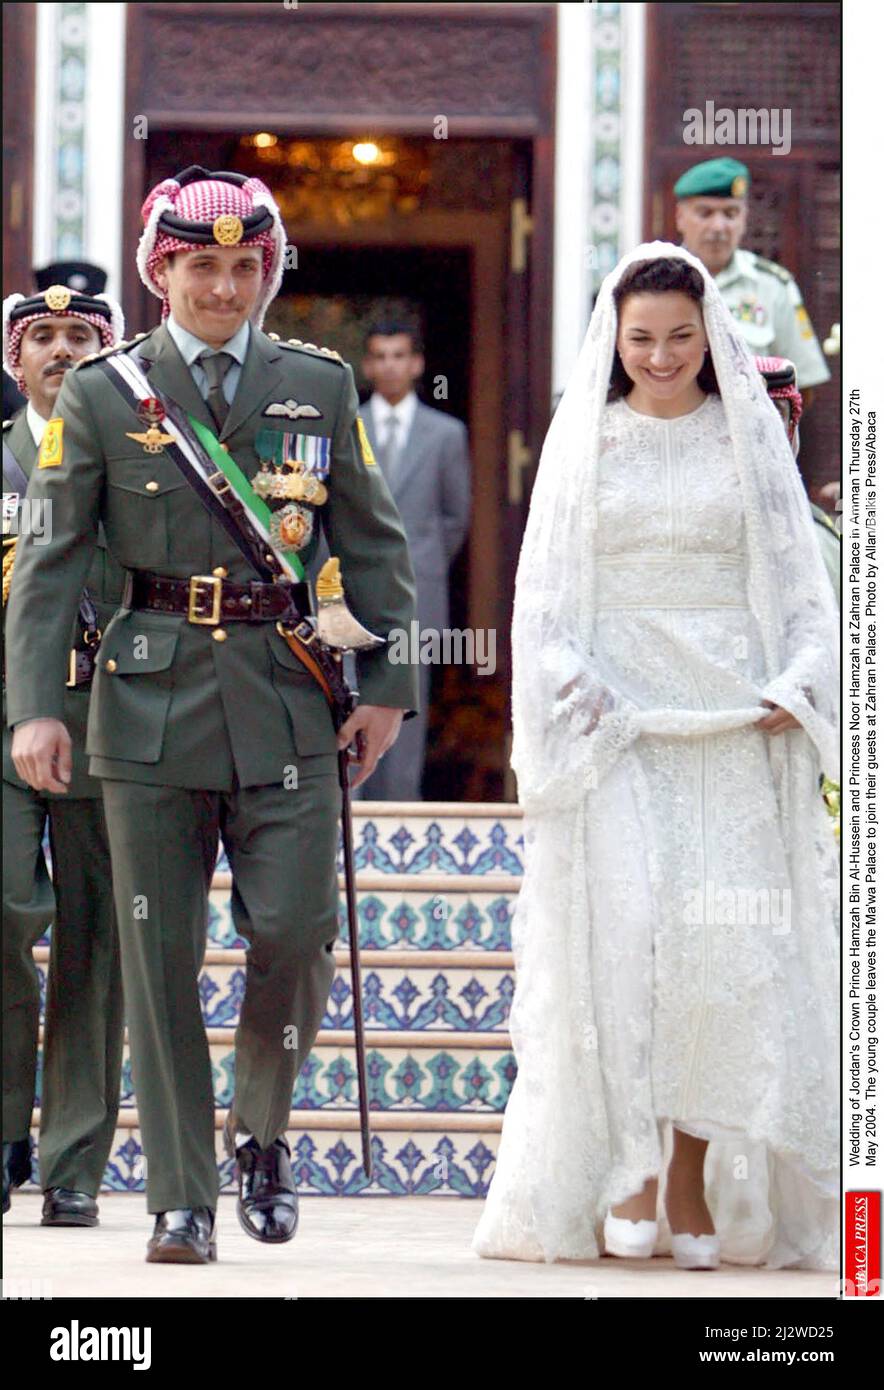 File Photo Wedding Of Jordans Crown Prince Hamzah Bin Al Hussein And Princess Noor Hamzah At